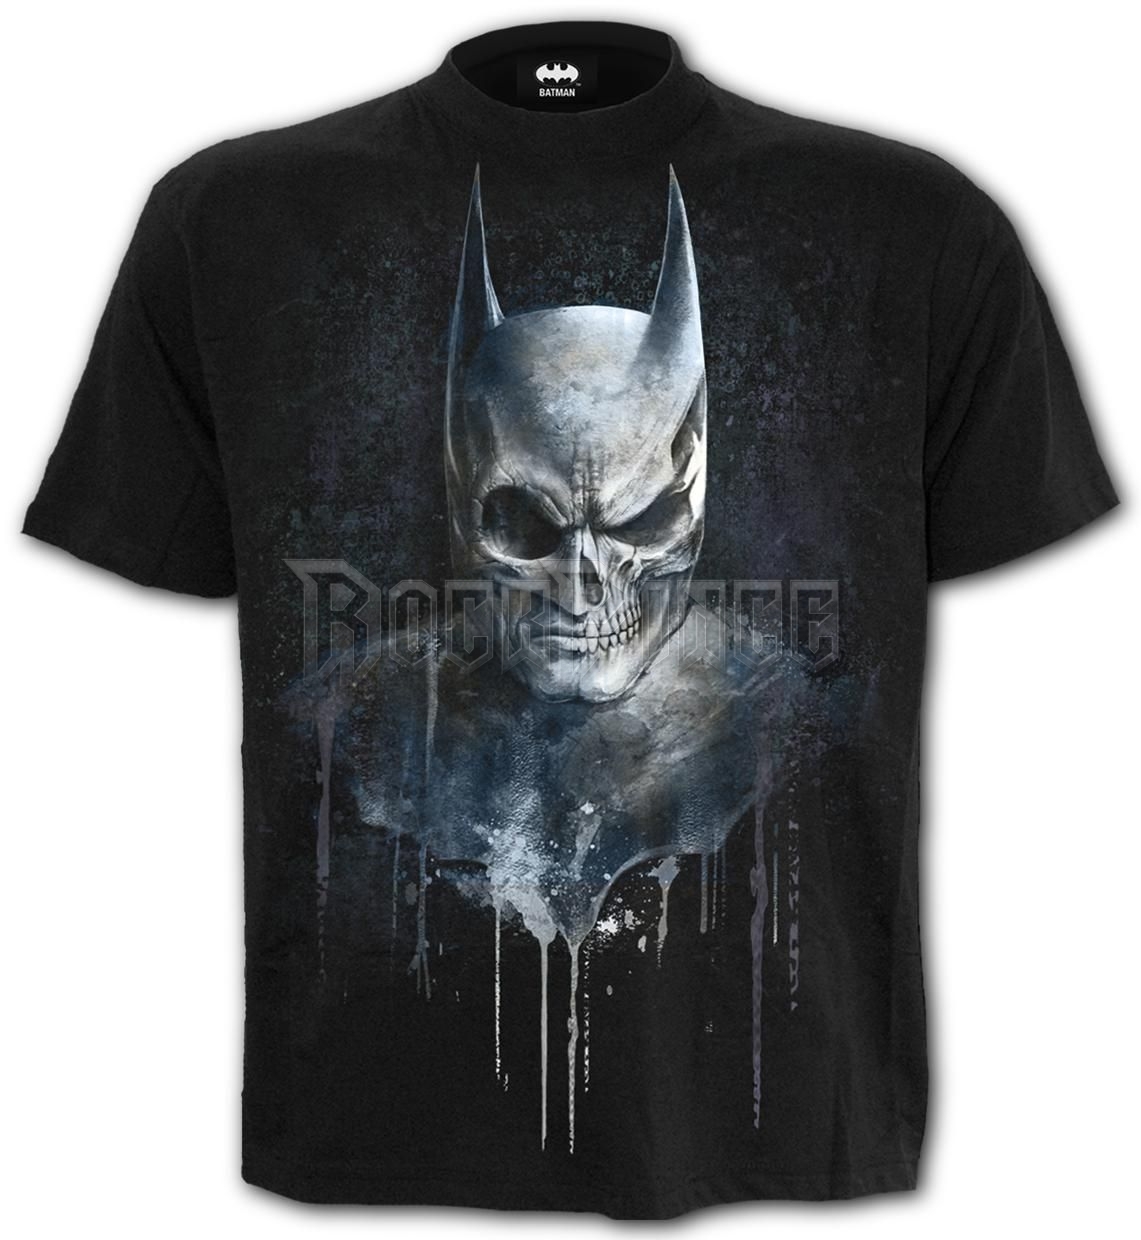 BATMAN - NOCTURNAL - T-Shirt Black - G409M101